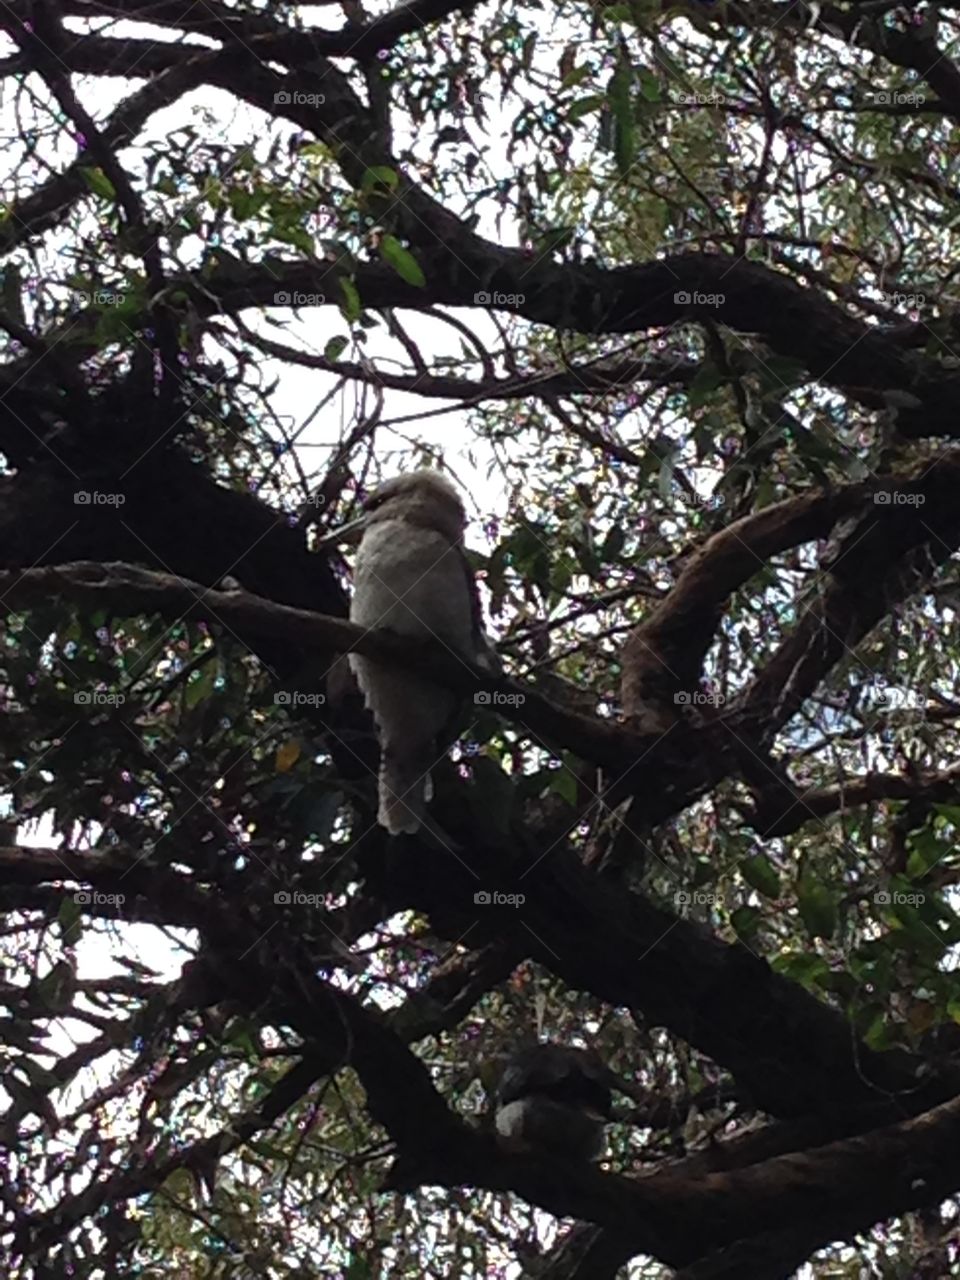 Kookaburra in the park. 